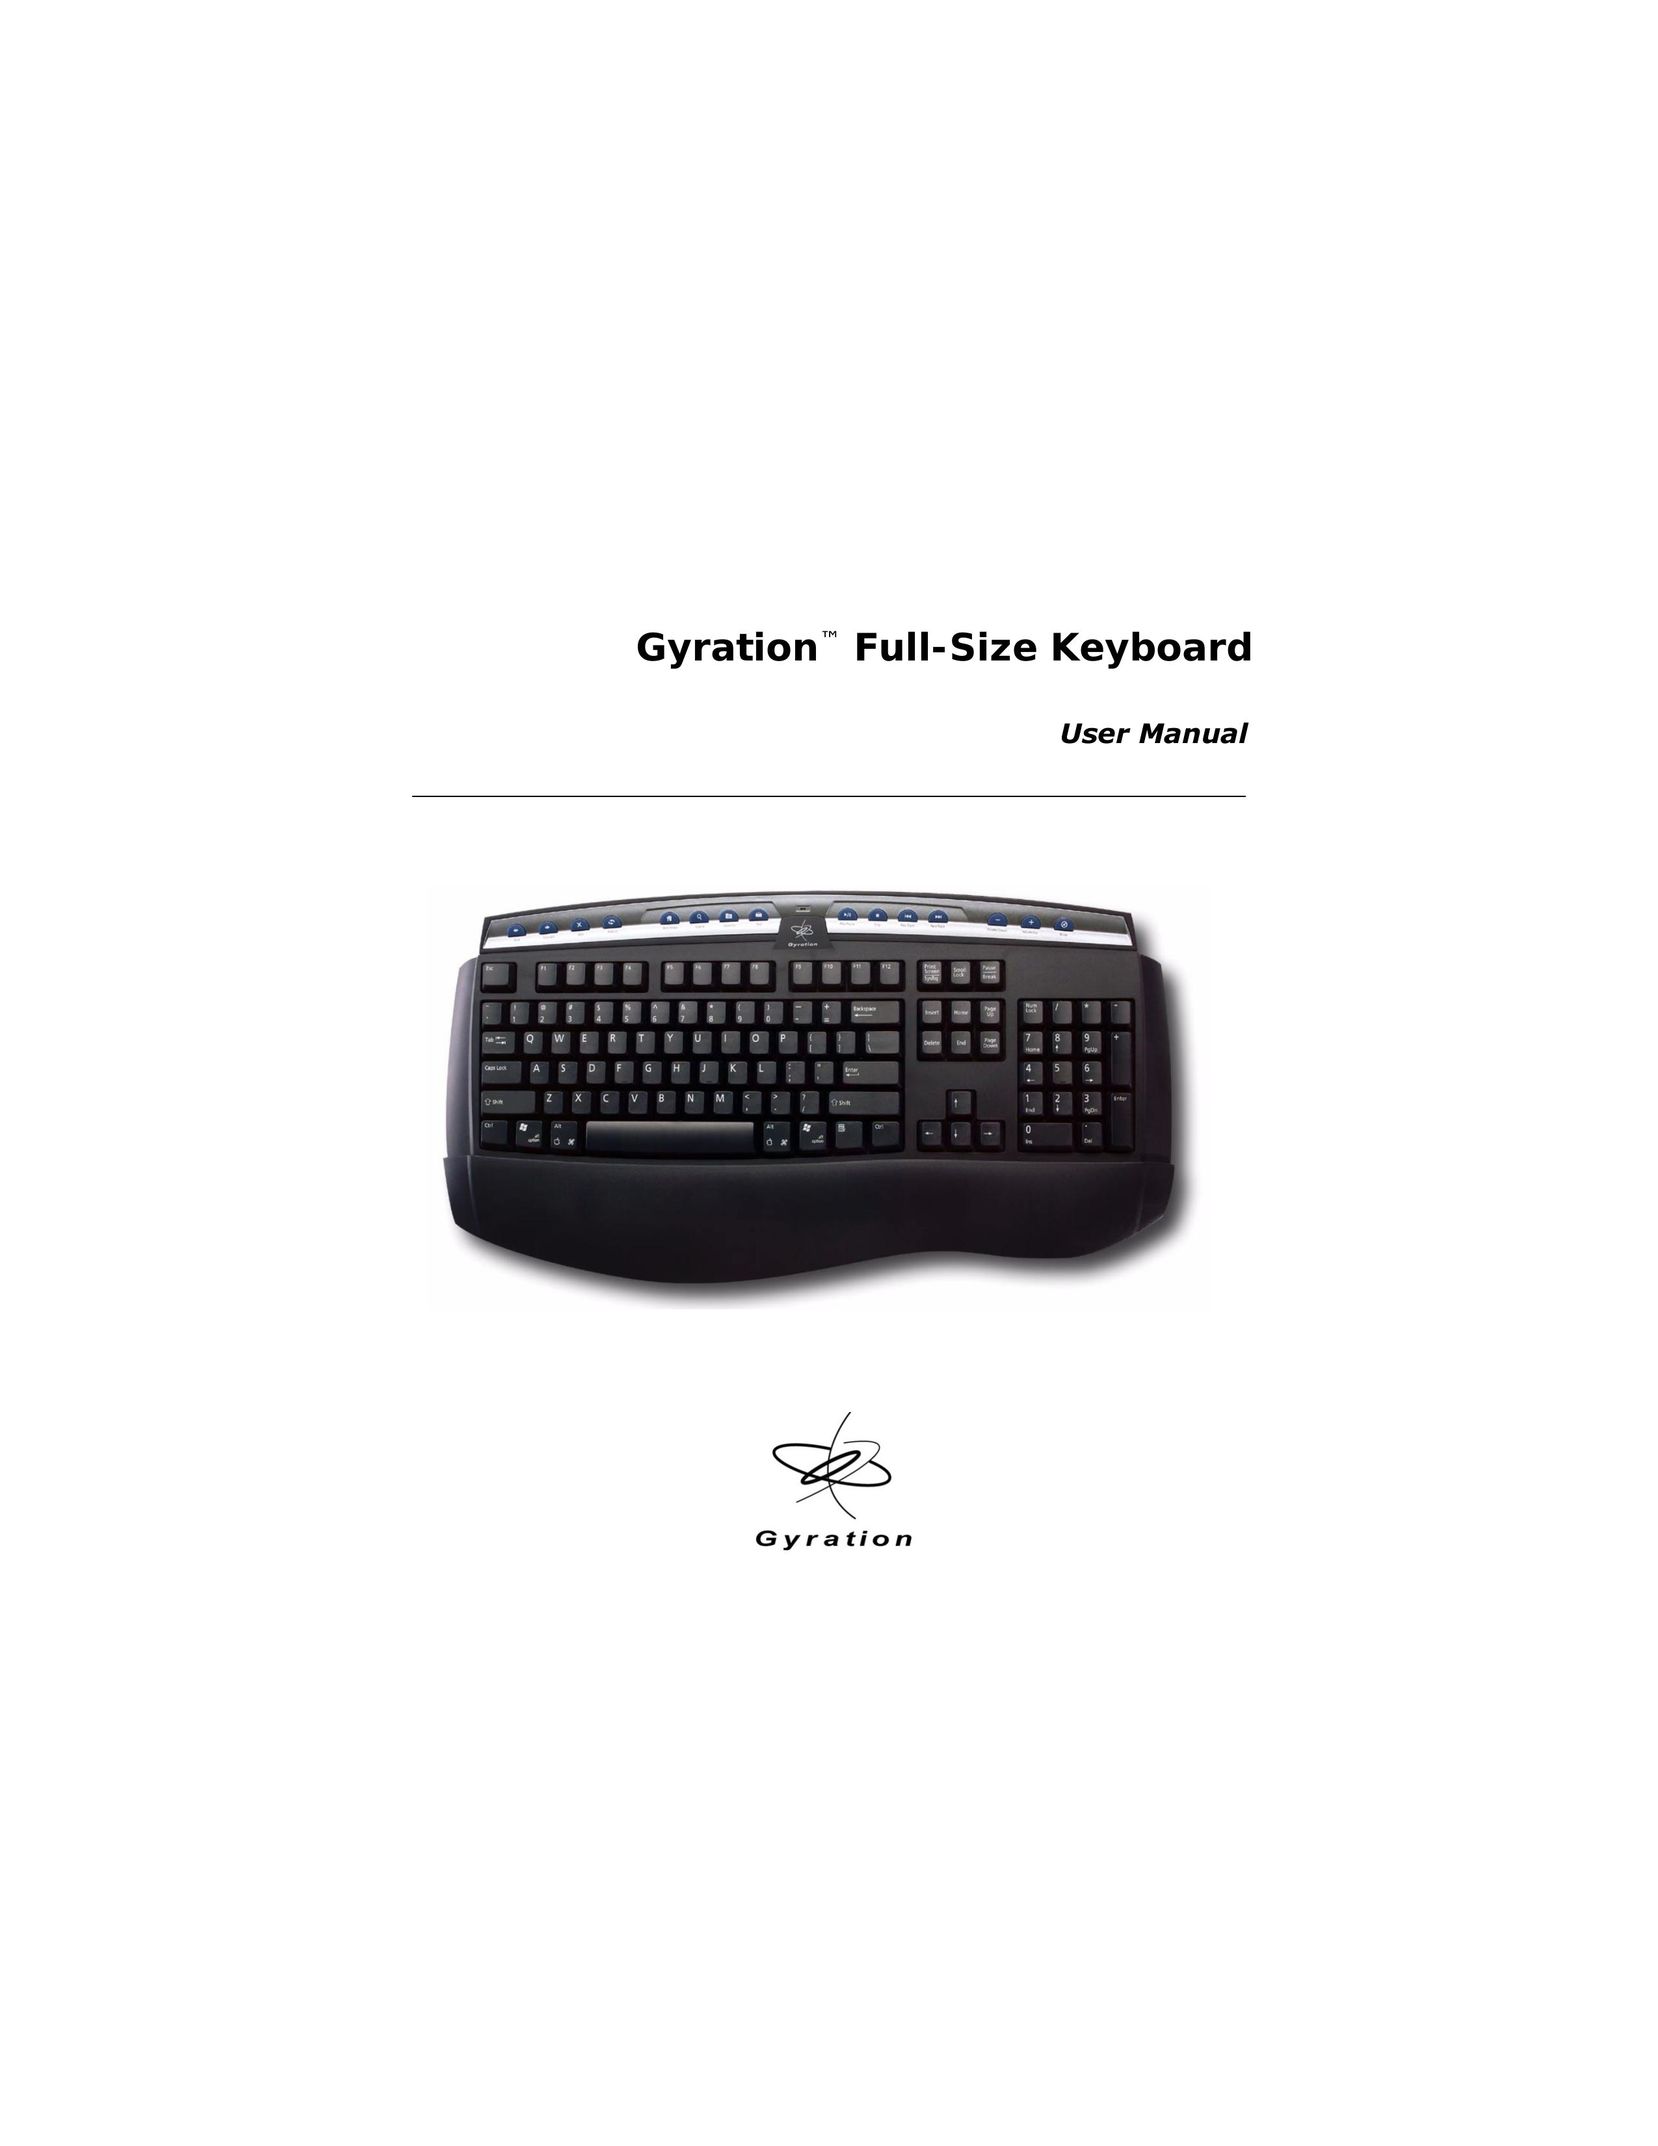 Gyration GP3200 Computer Keyboard User Manual